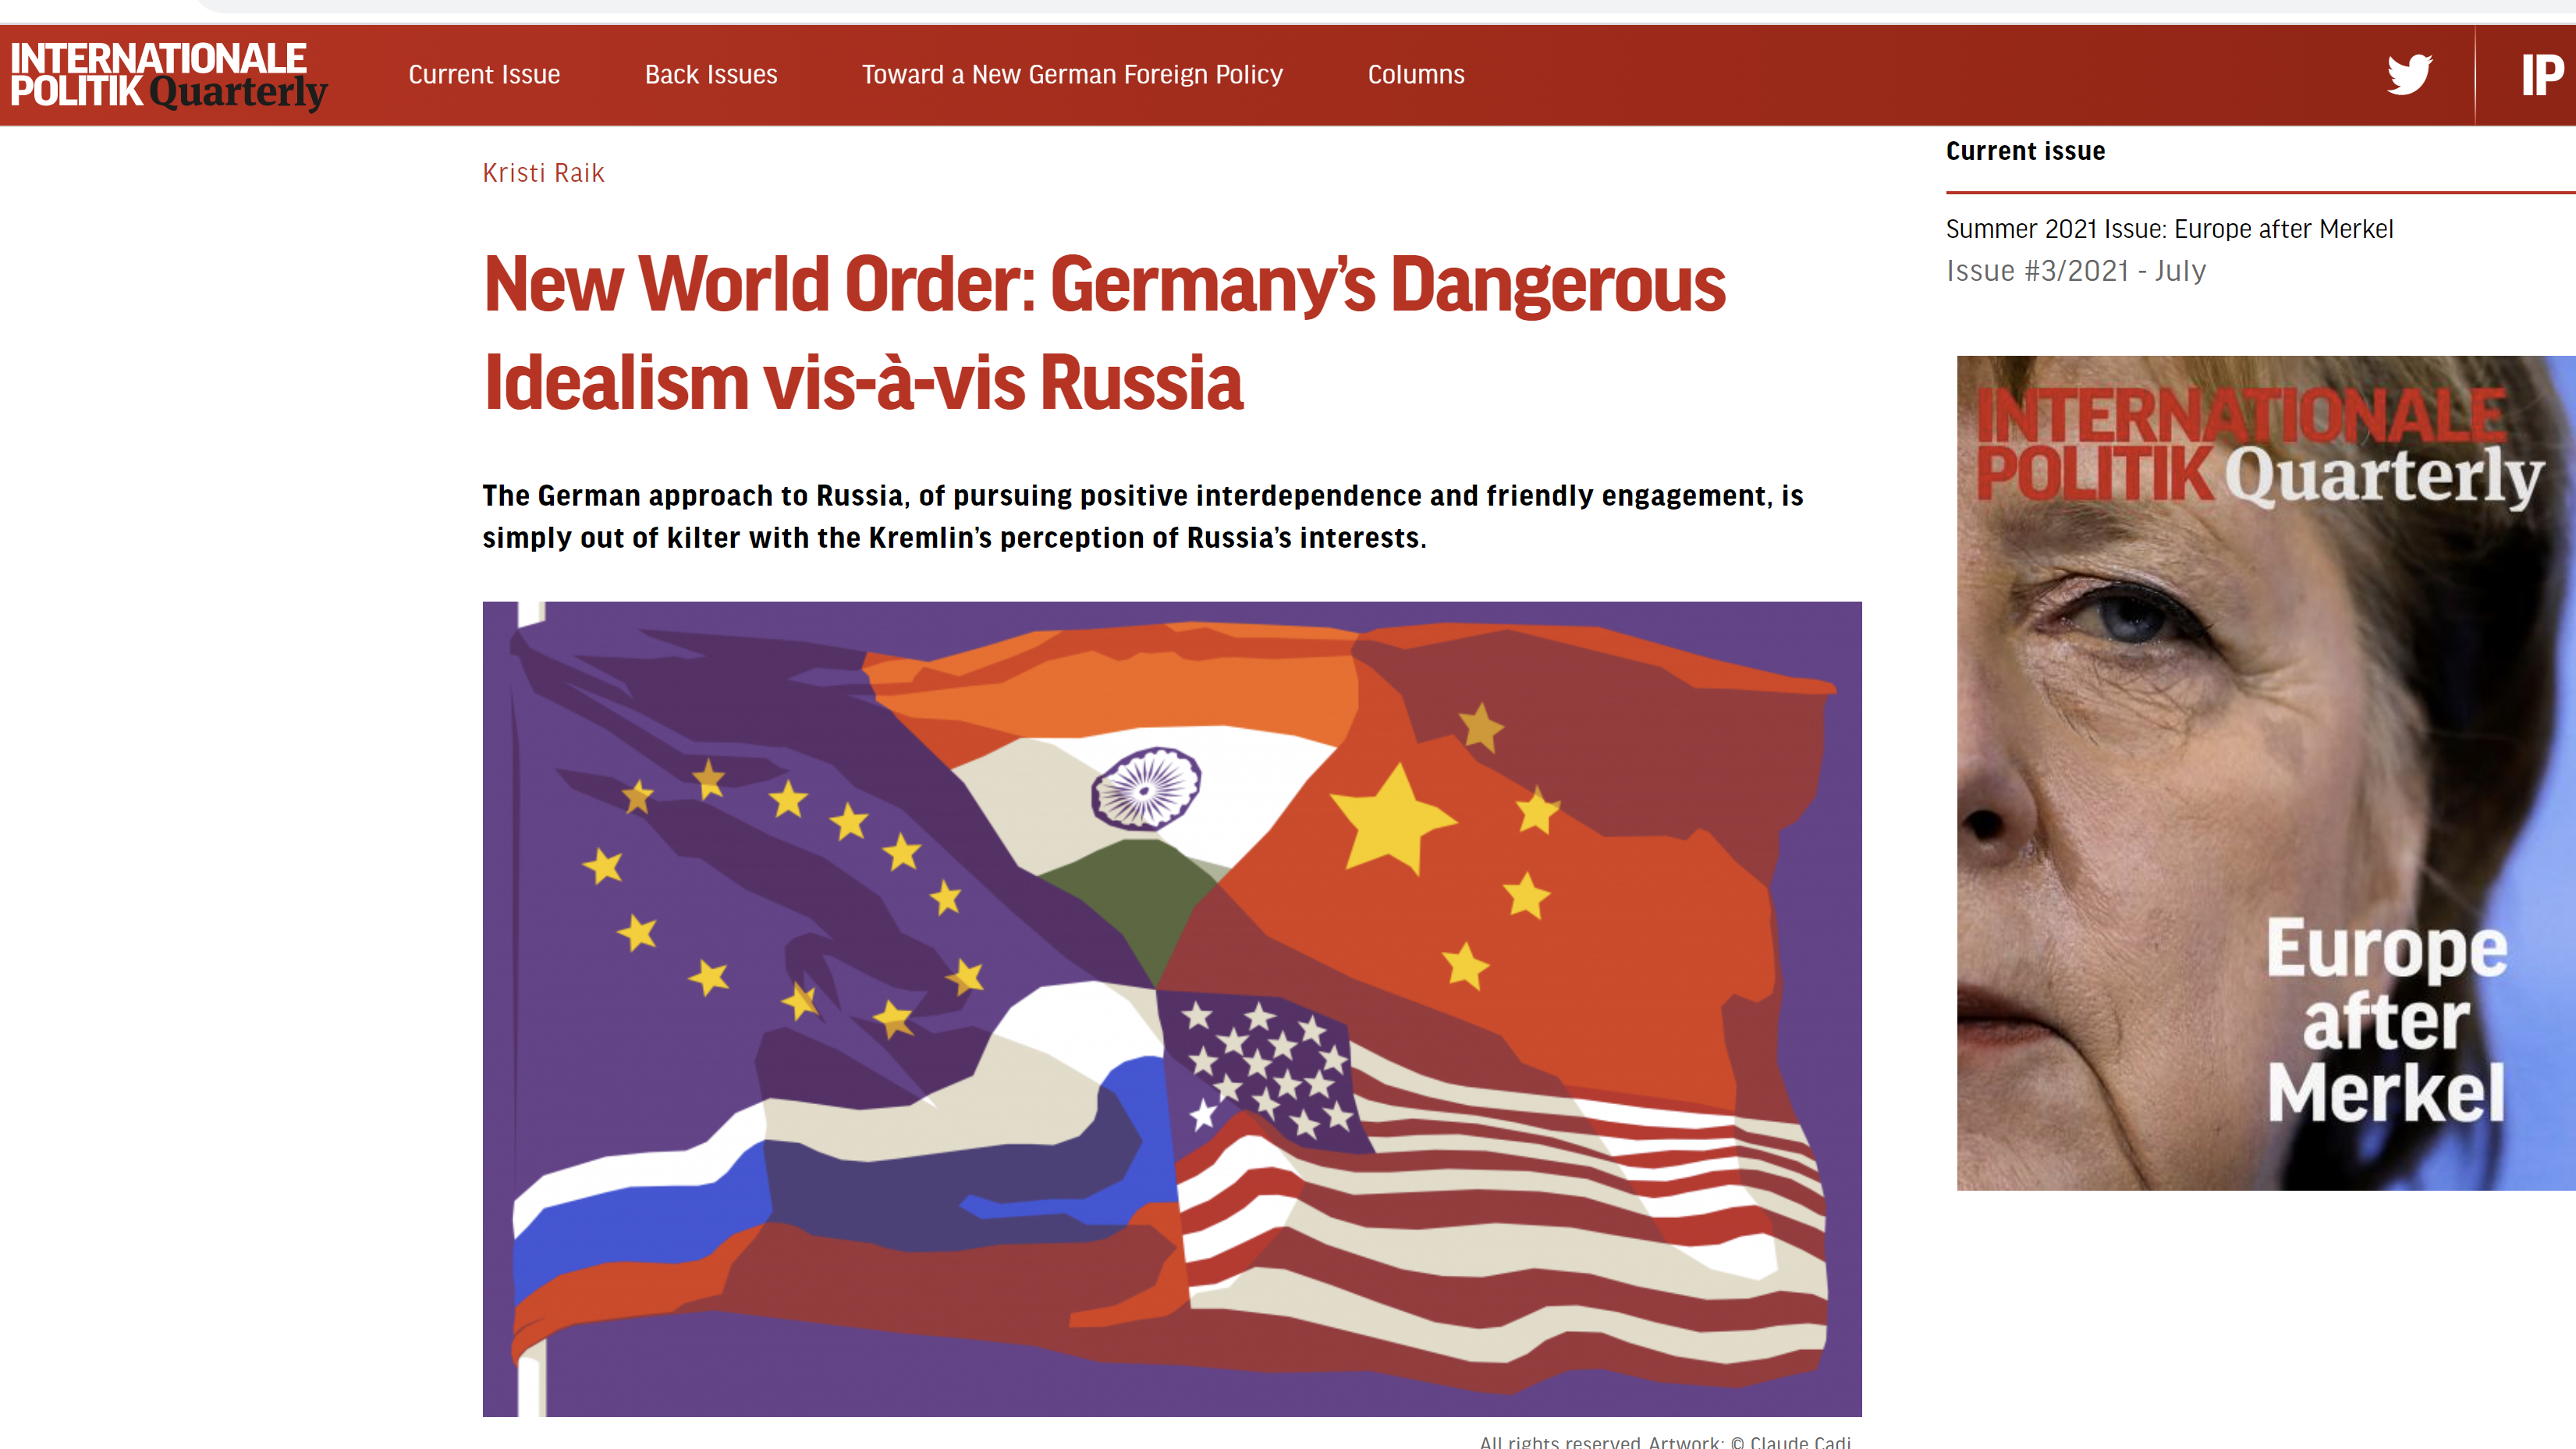 Image for “Germany’s Dangerous Idealism vis-à-vis Russia” by Kristi Raik in Internationale Politik